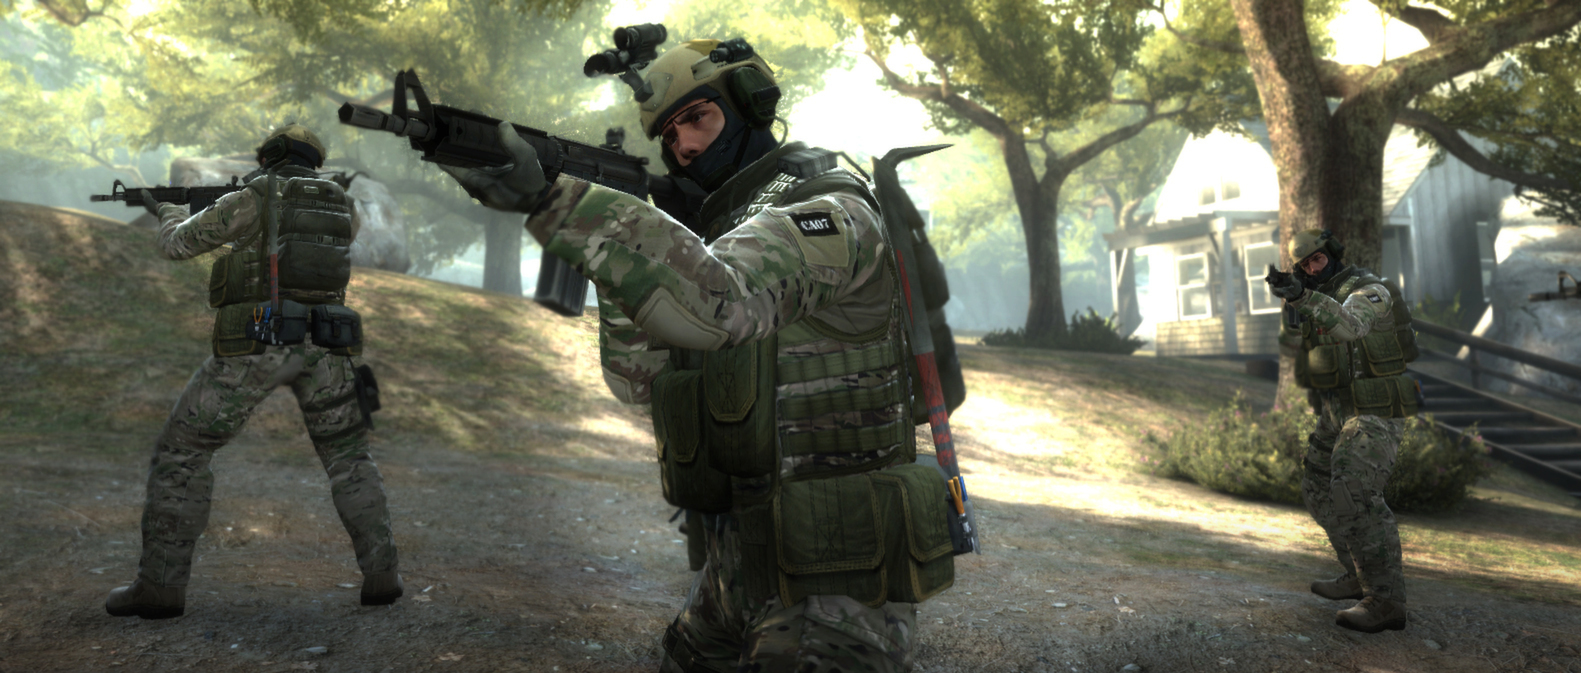 Скриншот 1 к игре Counter-Strike: Global Offensive (CS: GO)